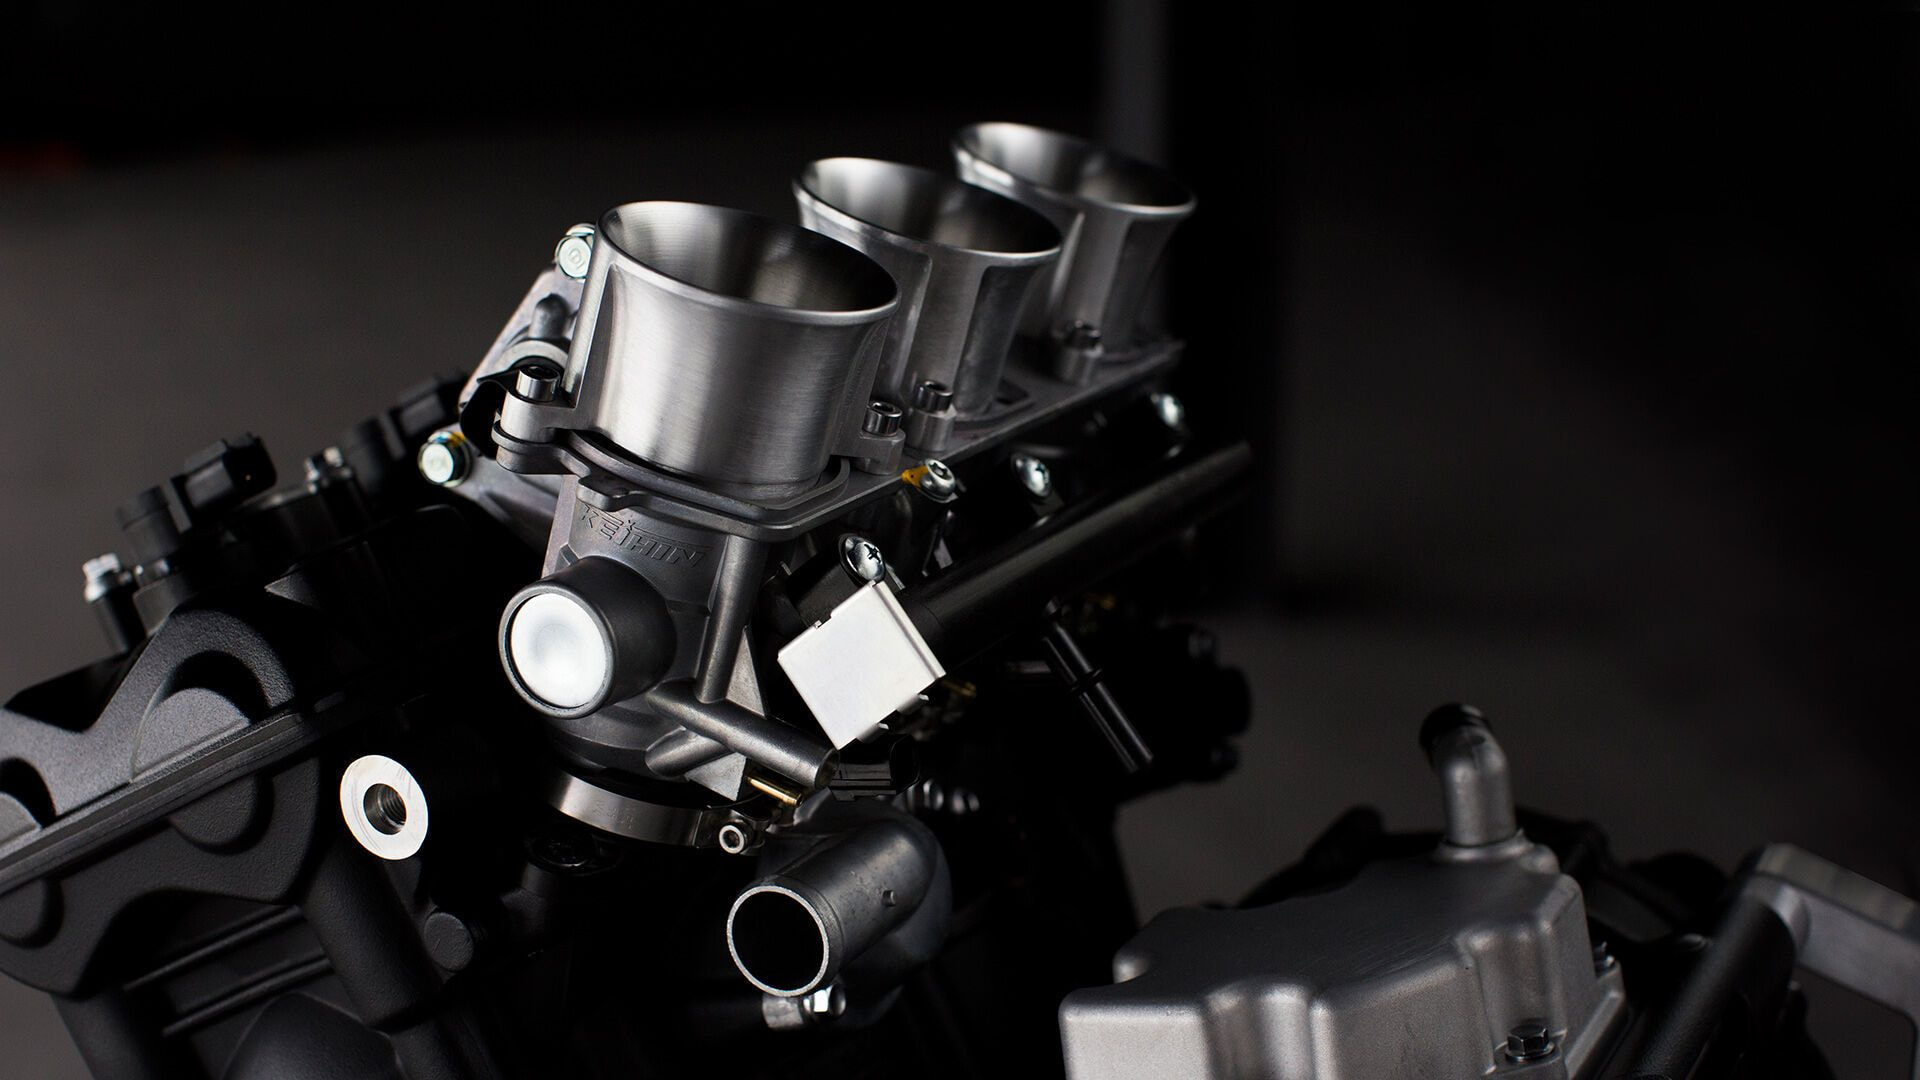 Triumph engine